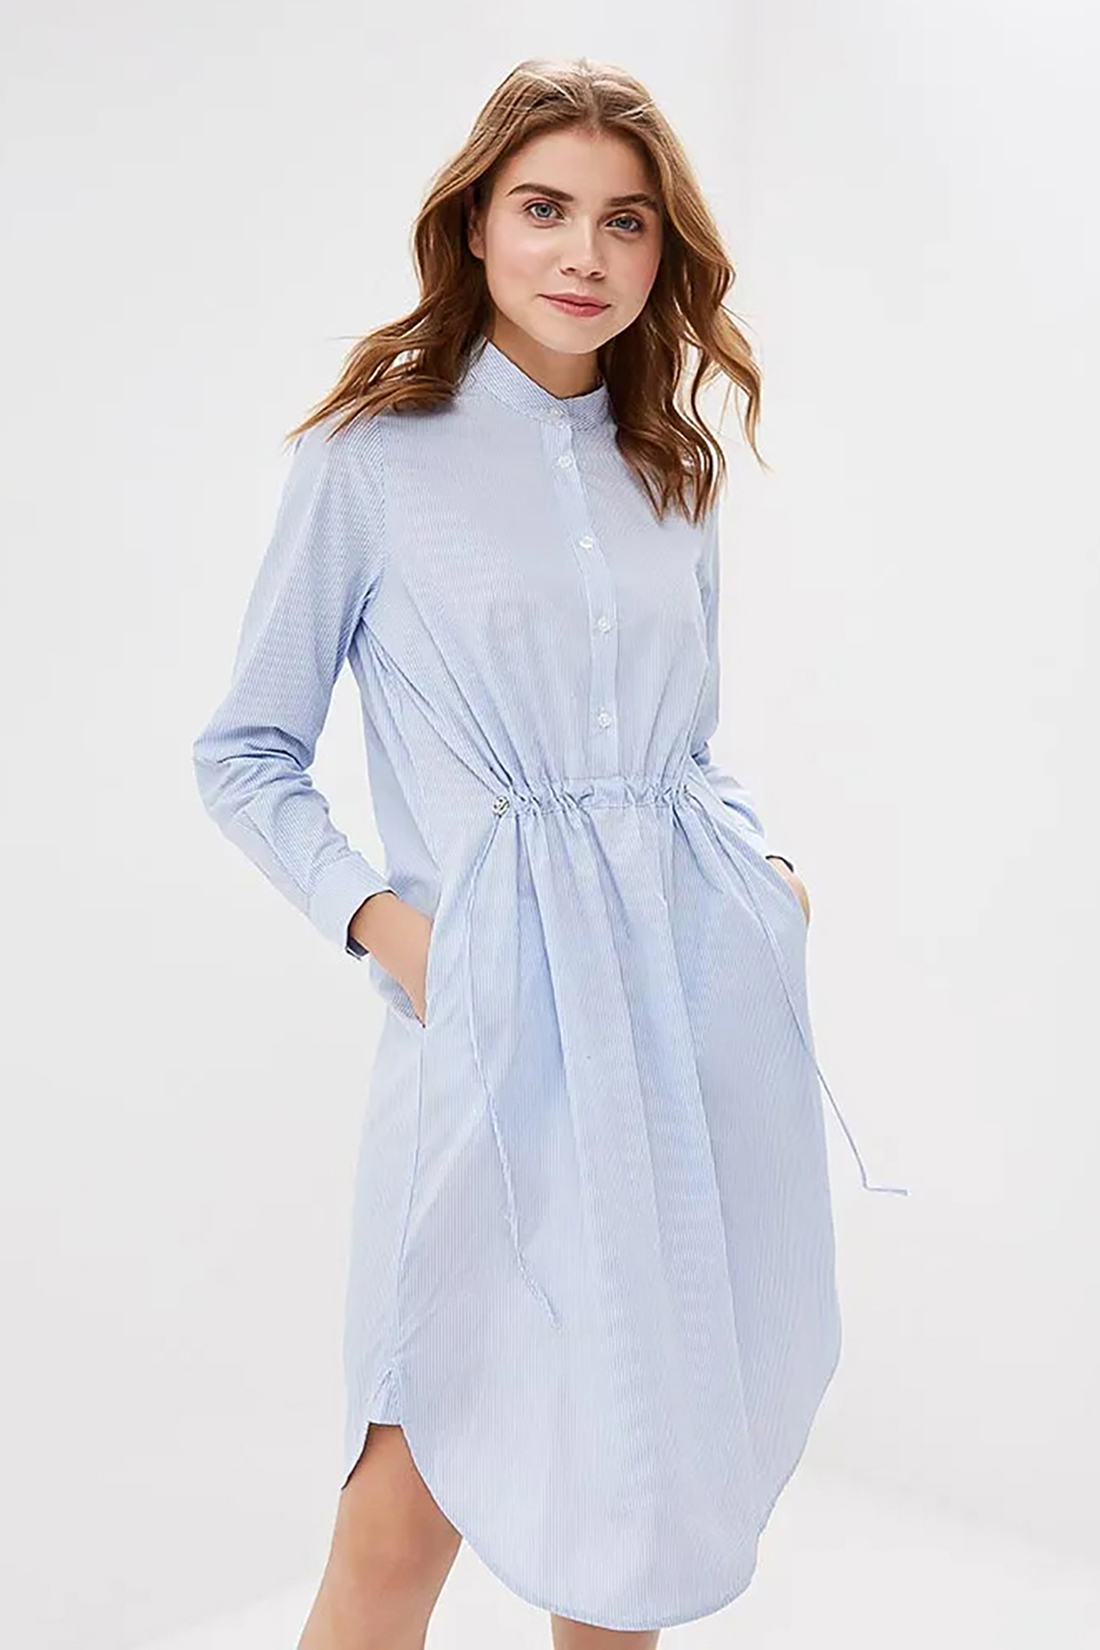 Платье-рубашка в тонкую полоску (арт. baon B459031), размер M, цвет angel blue striped#голубой Платье-рубашка в тонкую полоску (арт. baon B459031) - фото 3